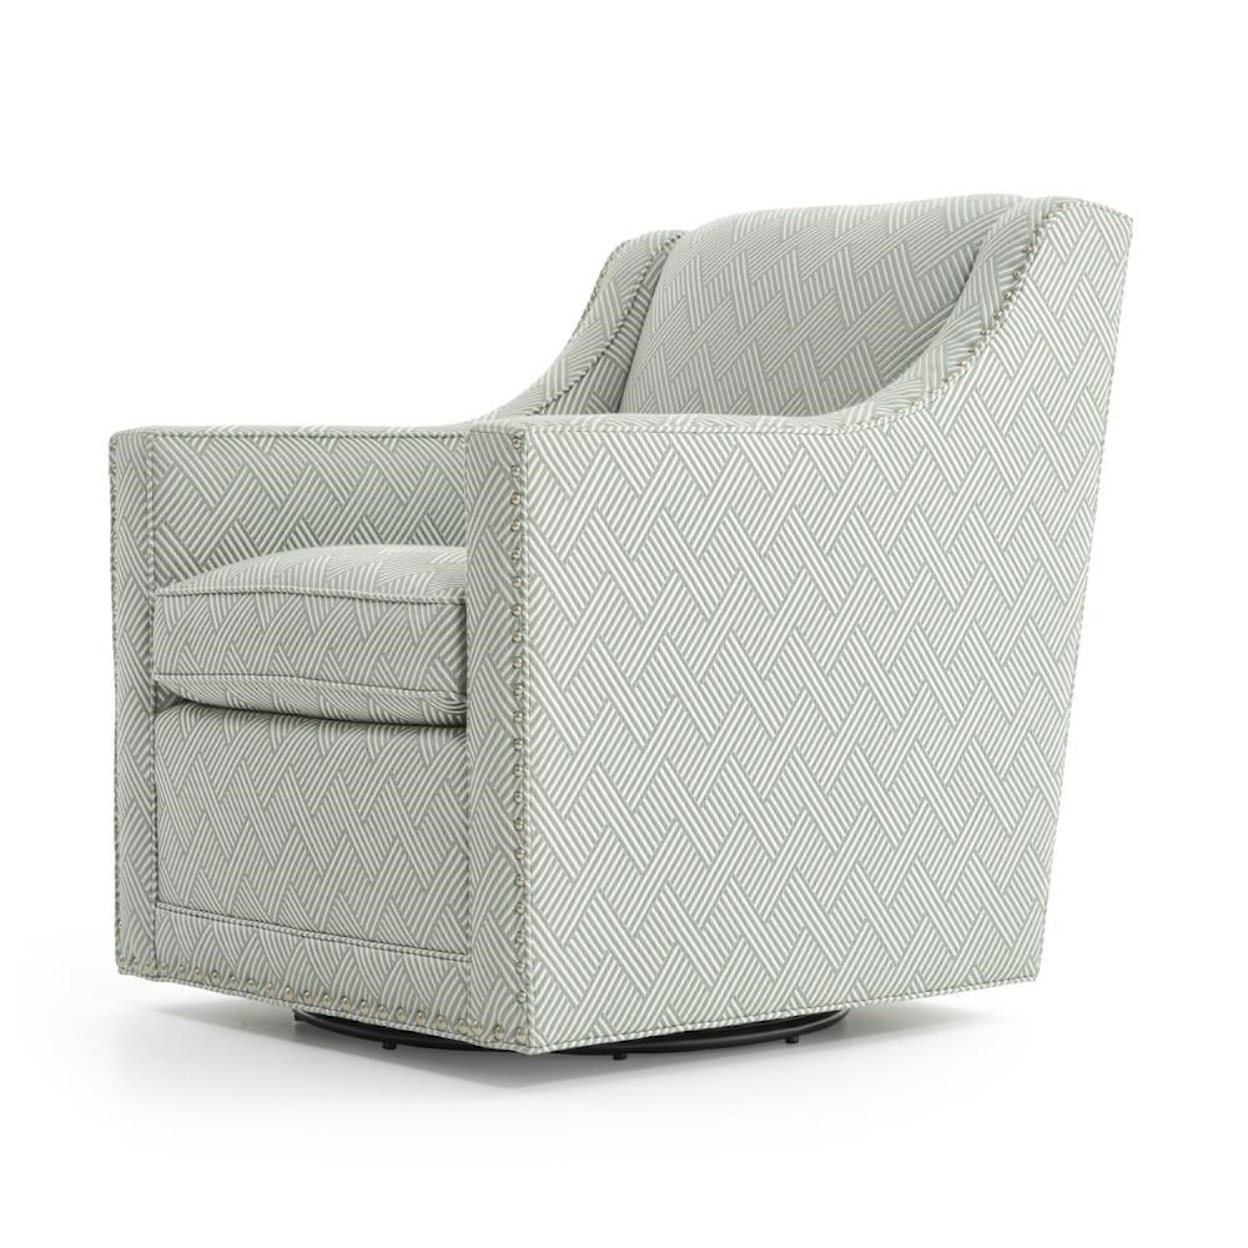 Lexington Upholstery Barrier Chair